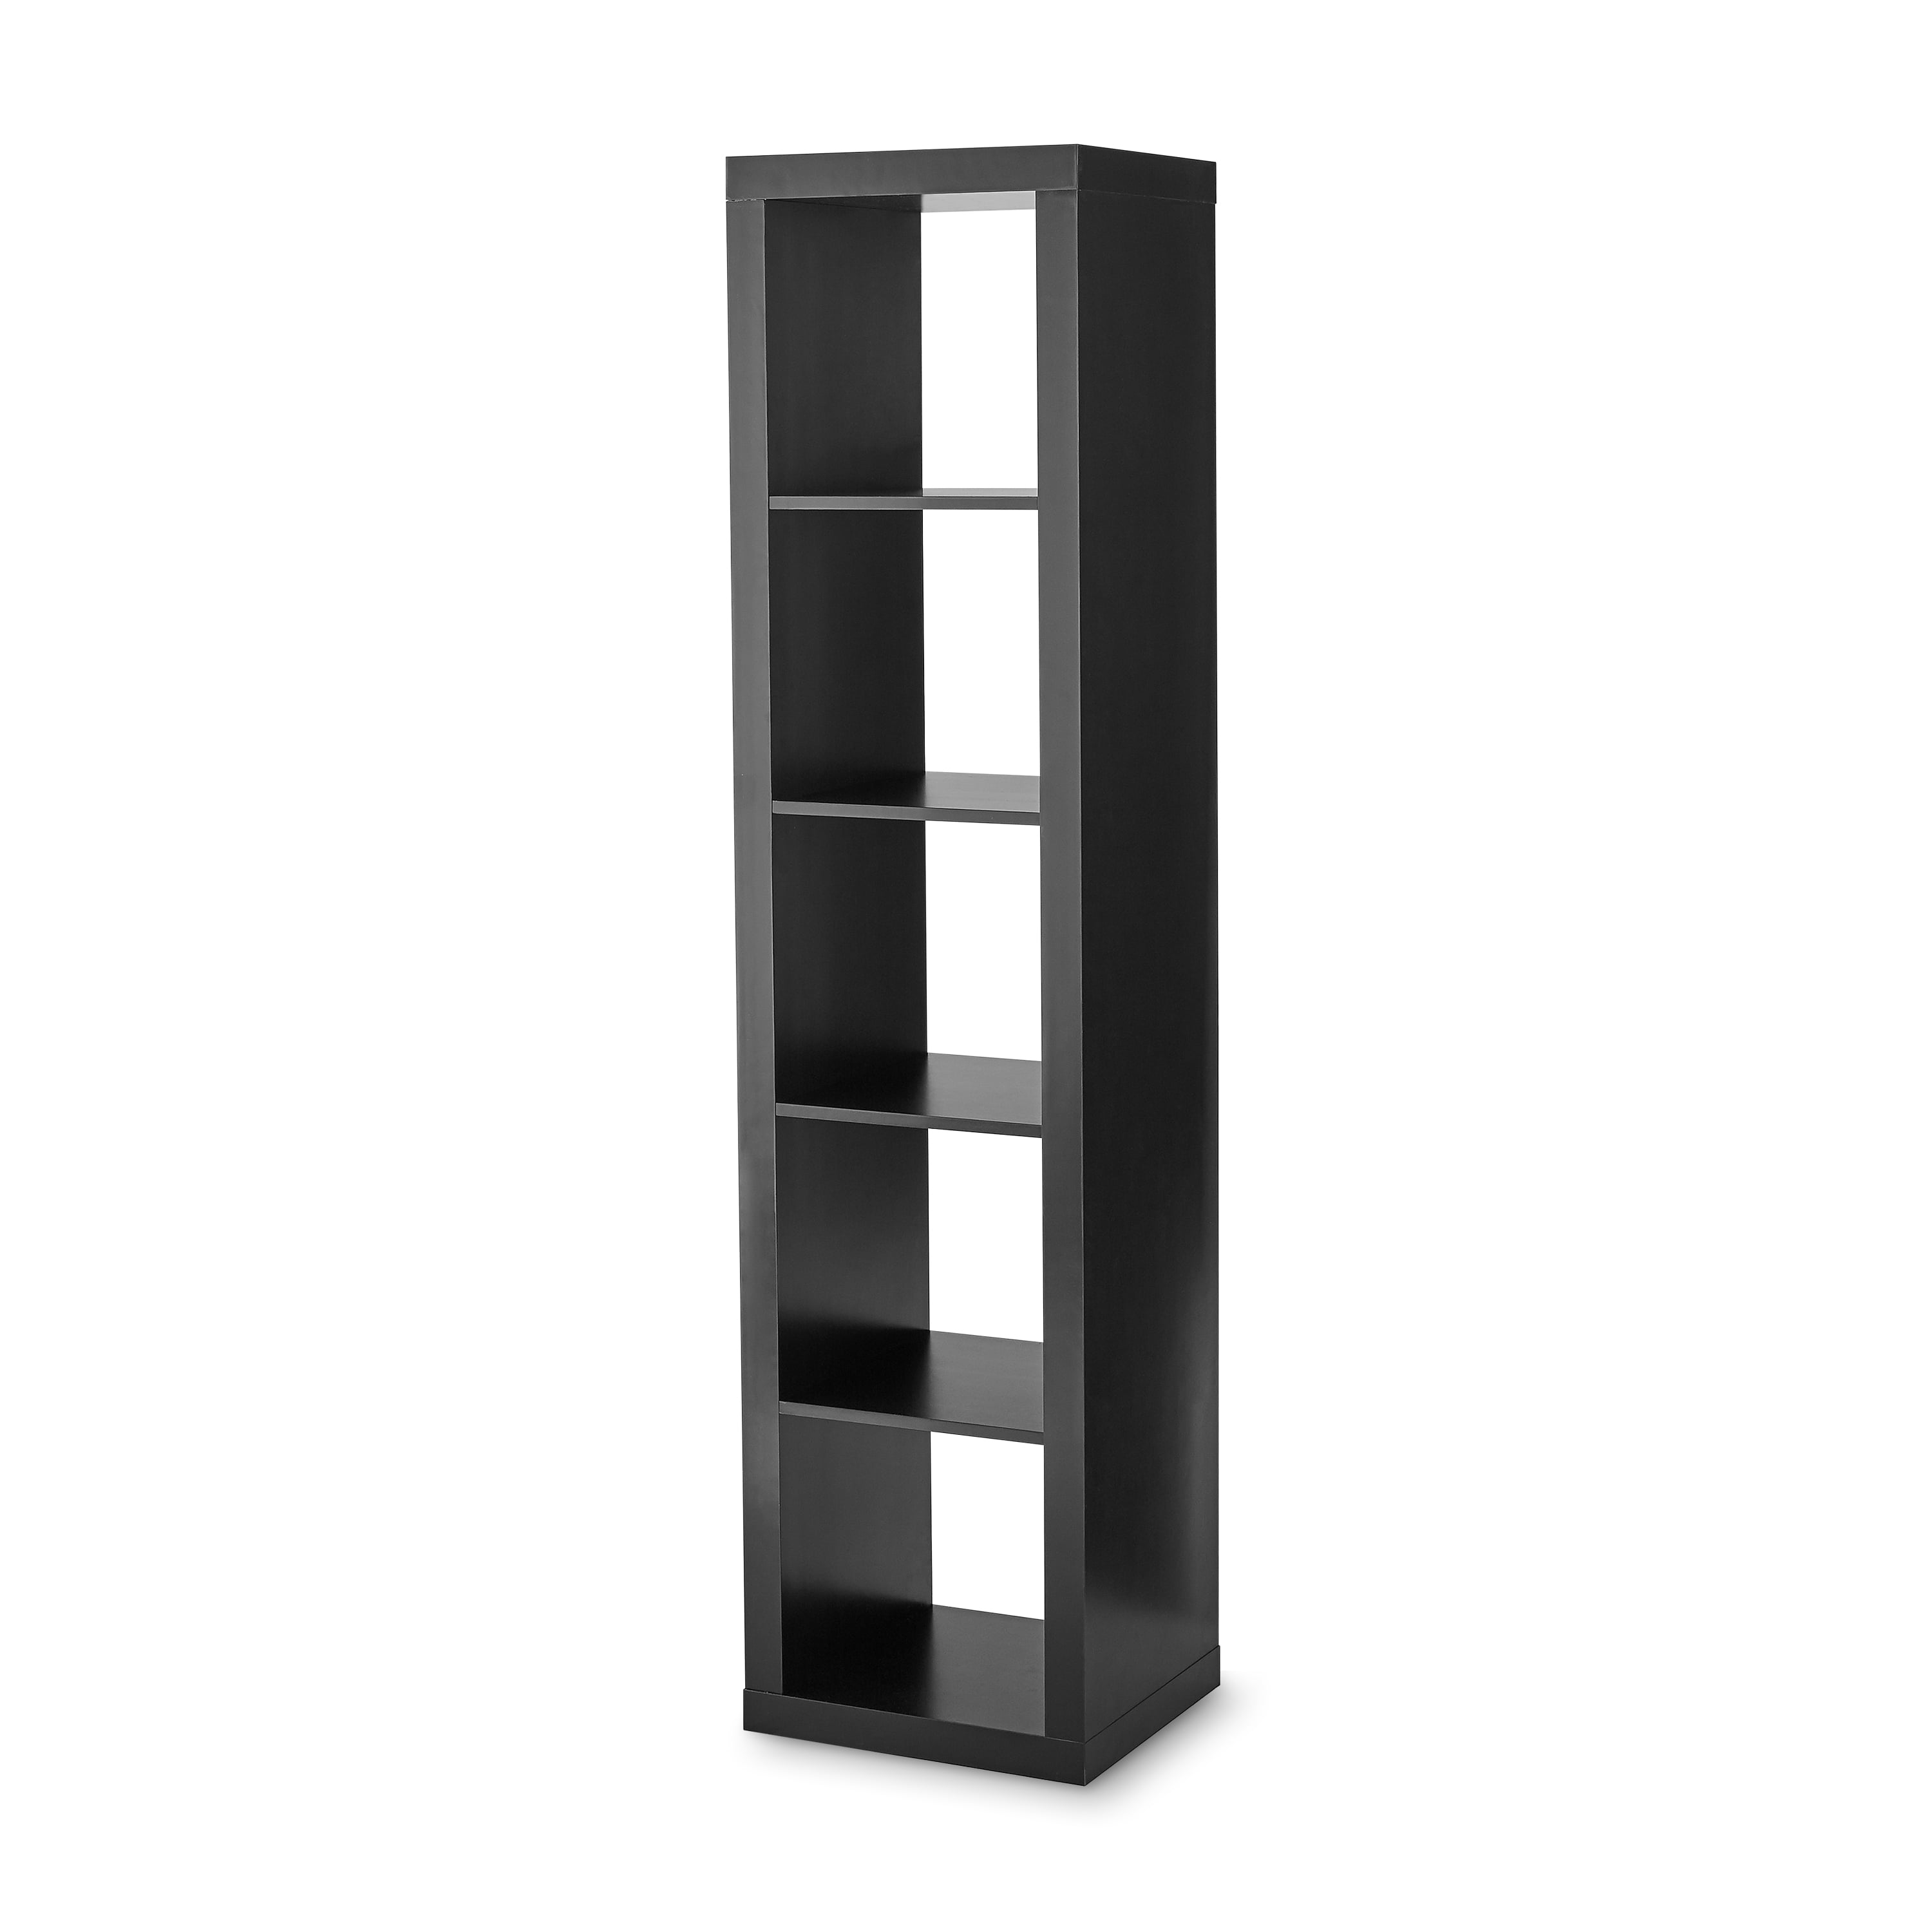 Better Homes & Gardens 5-Cube Storage Organizer Bookcase Open Back Design Black 